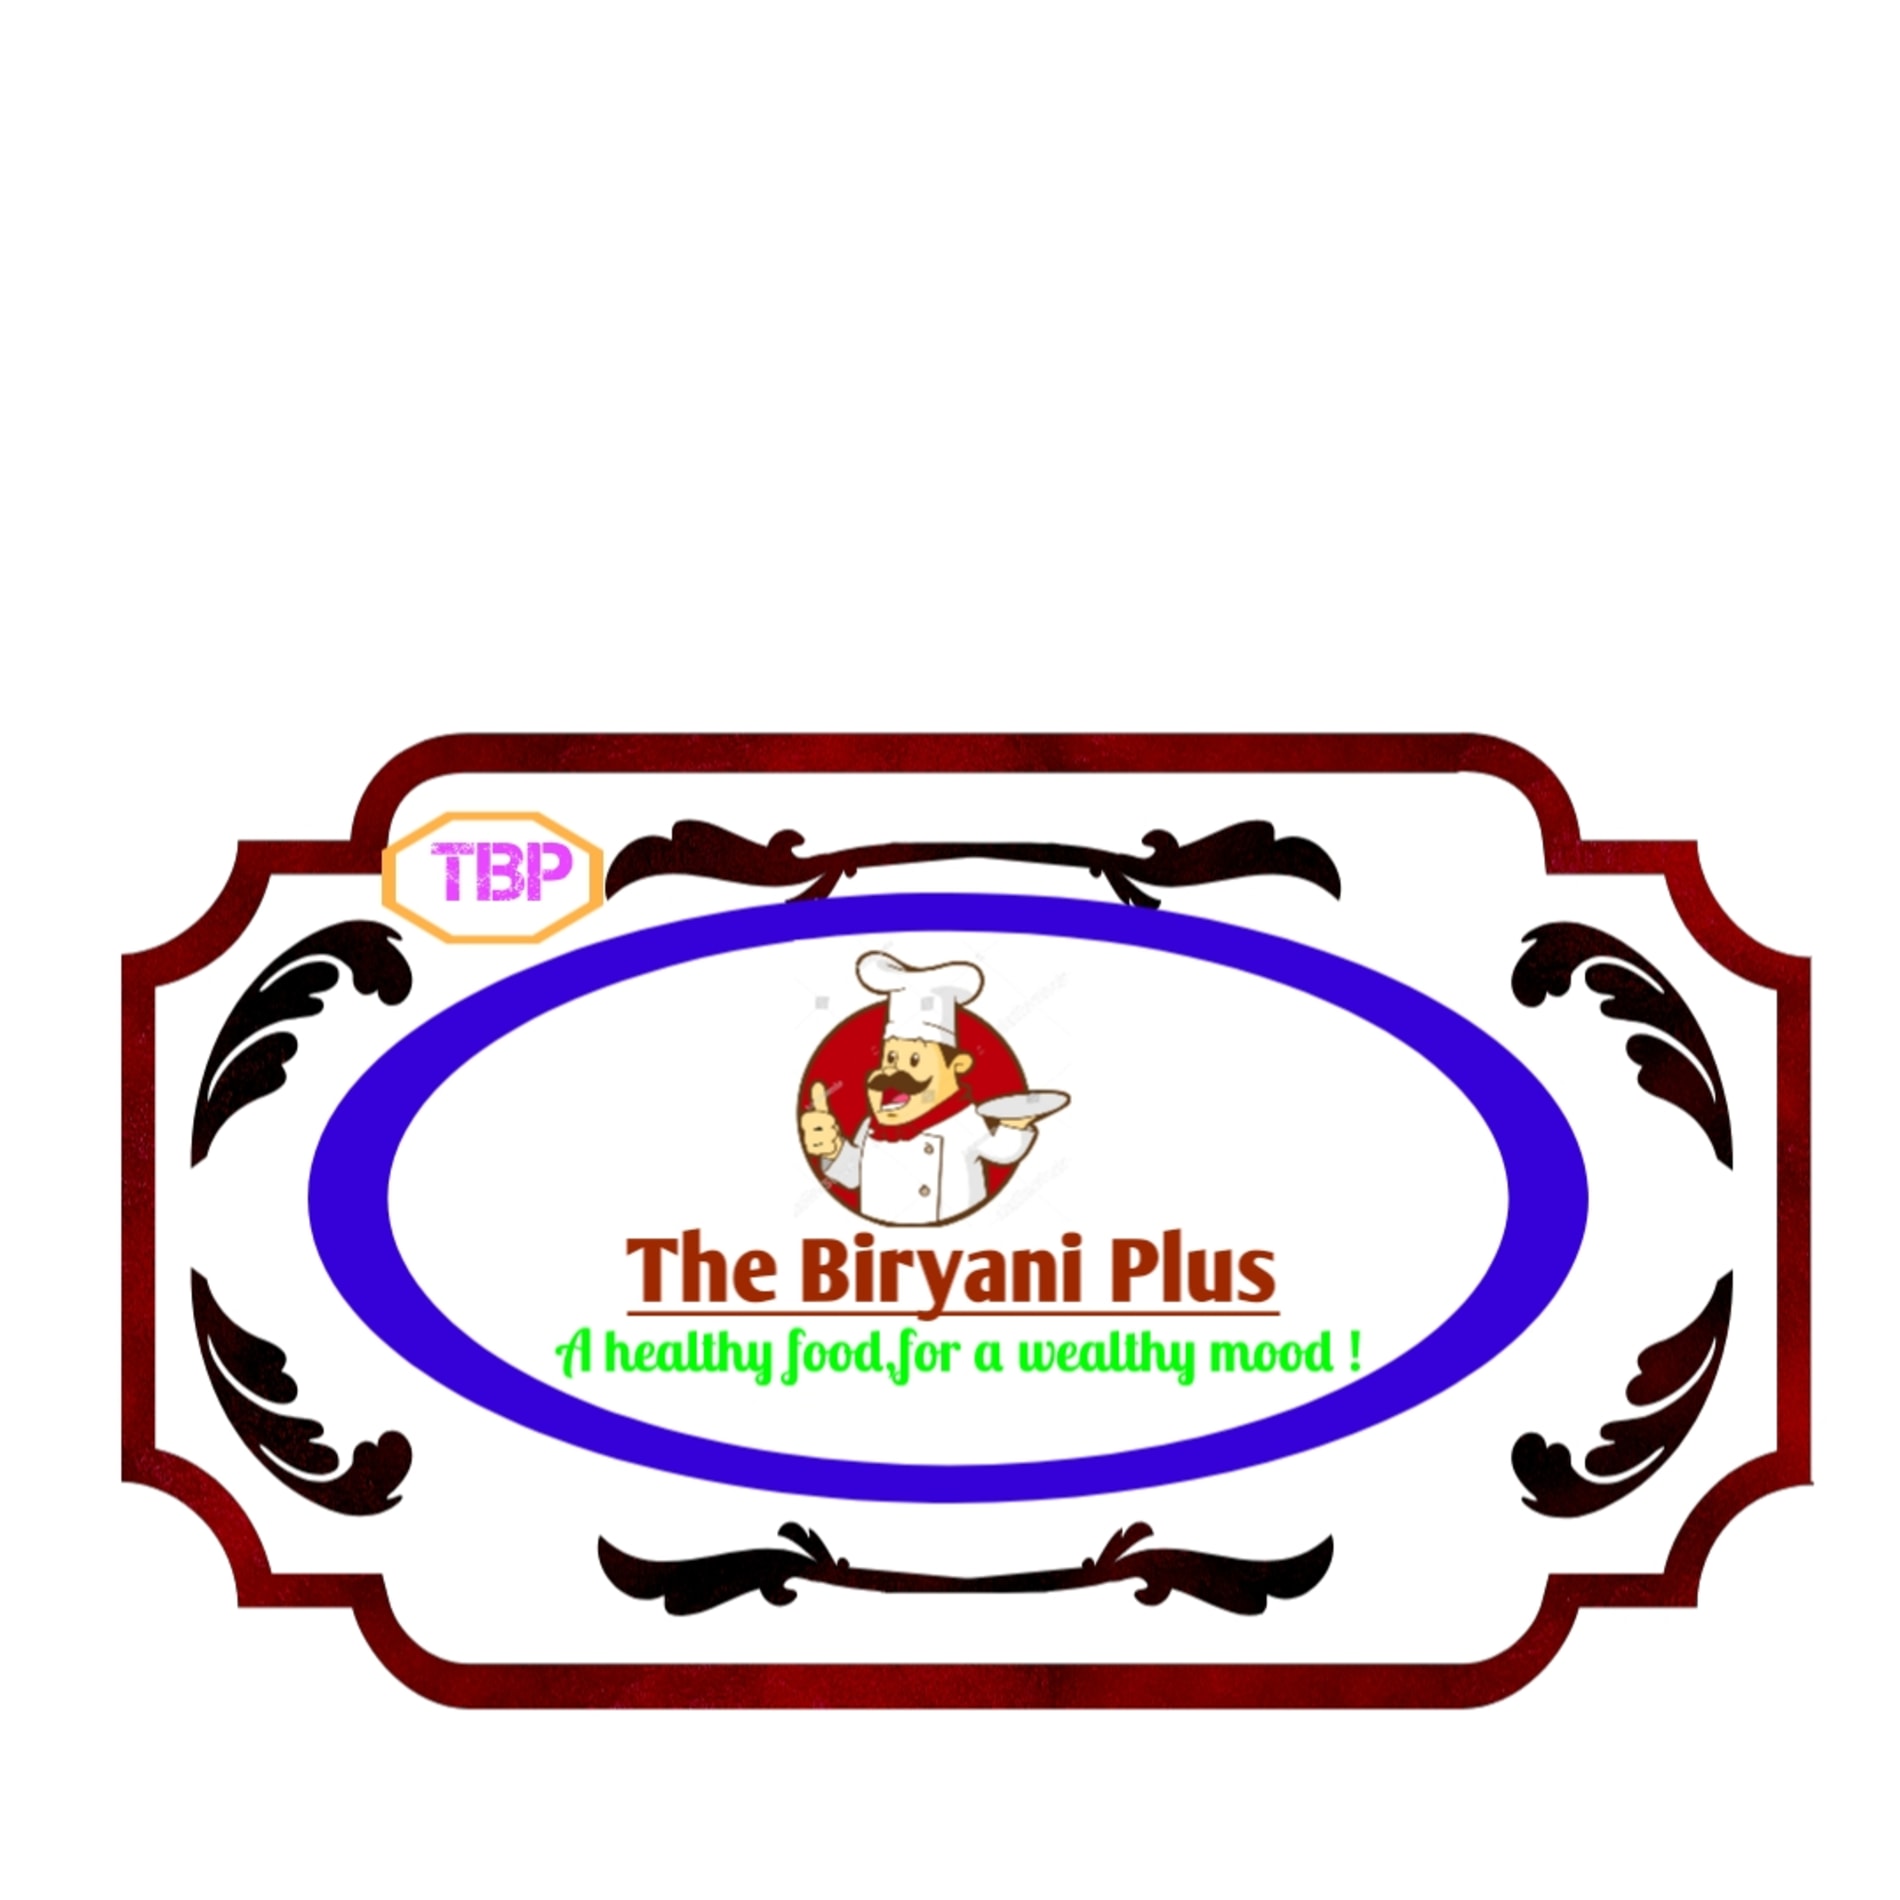 The Biryani Plus